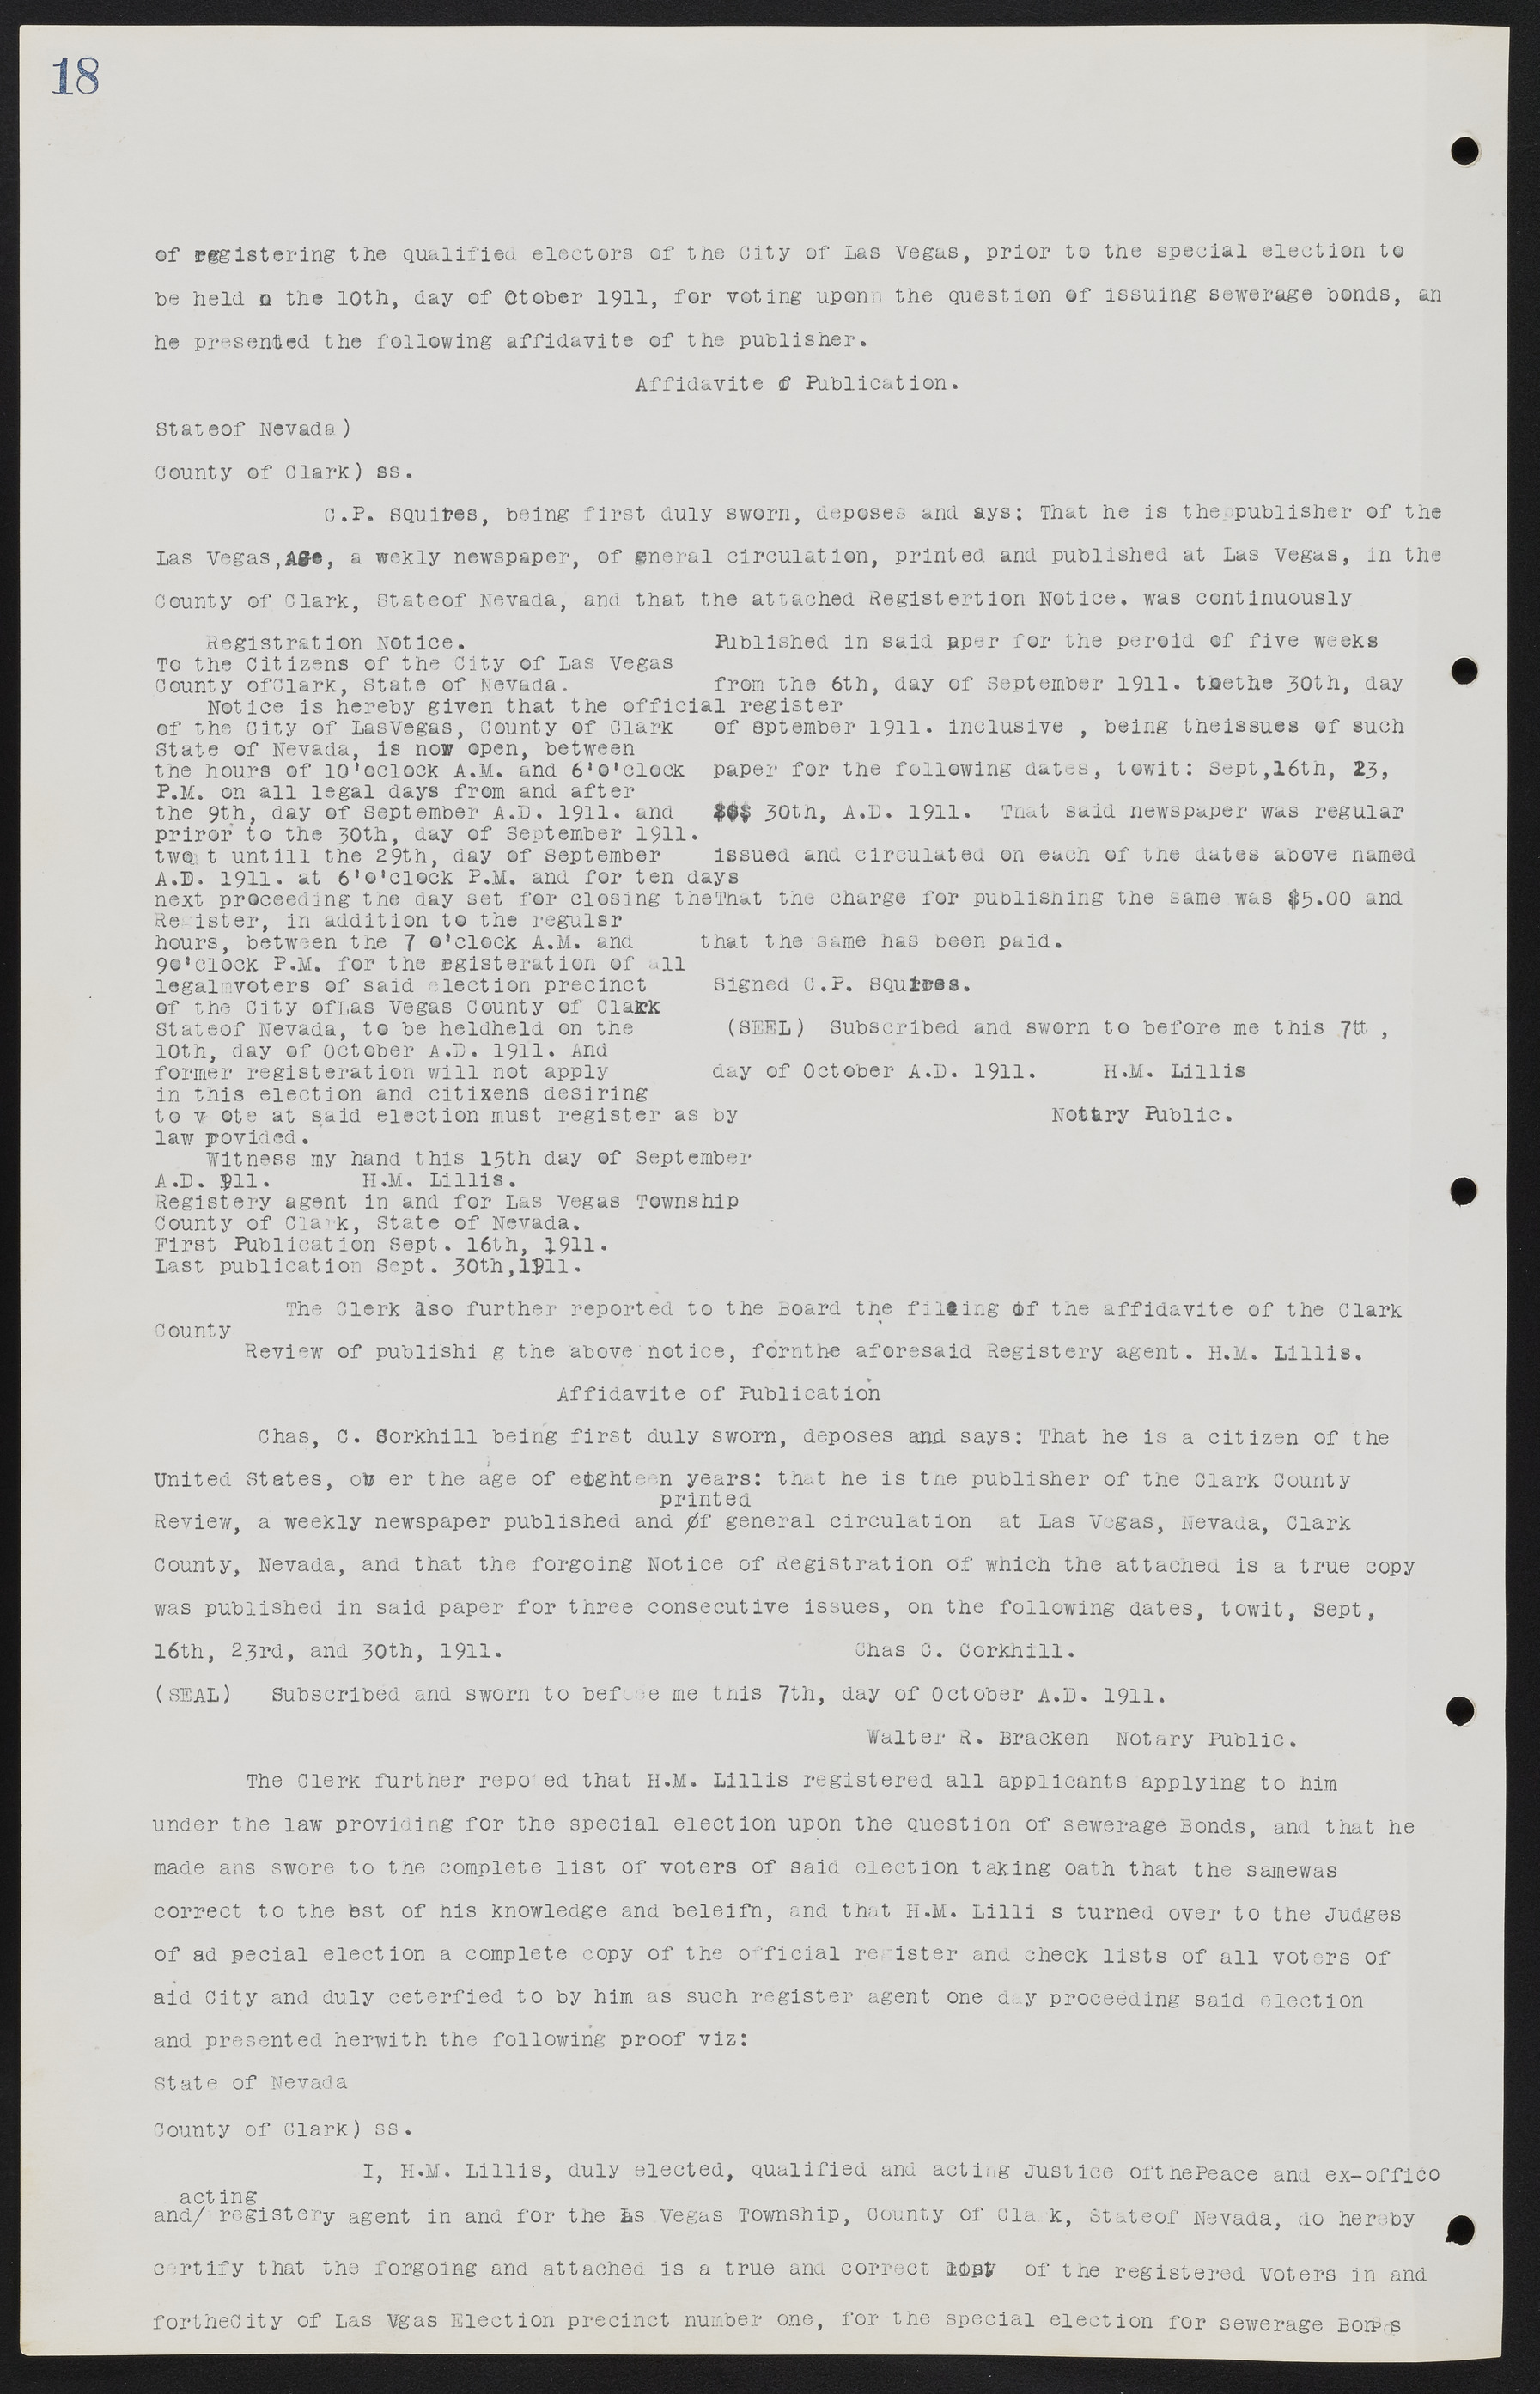 Las Vegas City Commission Minutes, June 22, 1911 to February 7, 1922, lvc000001-32